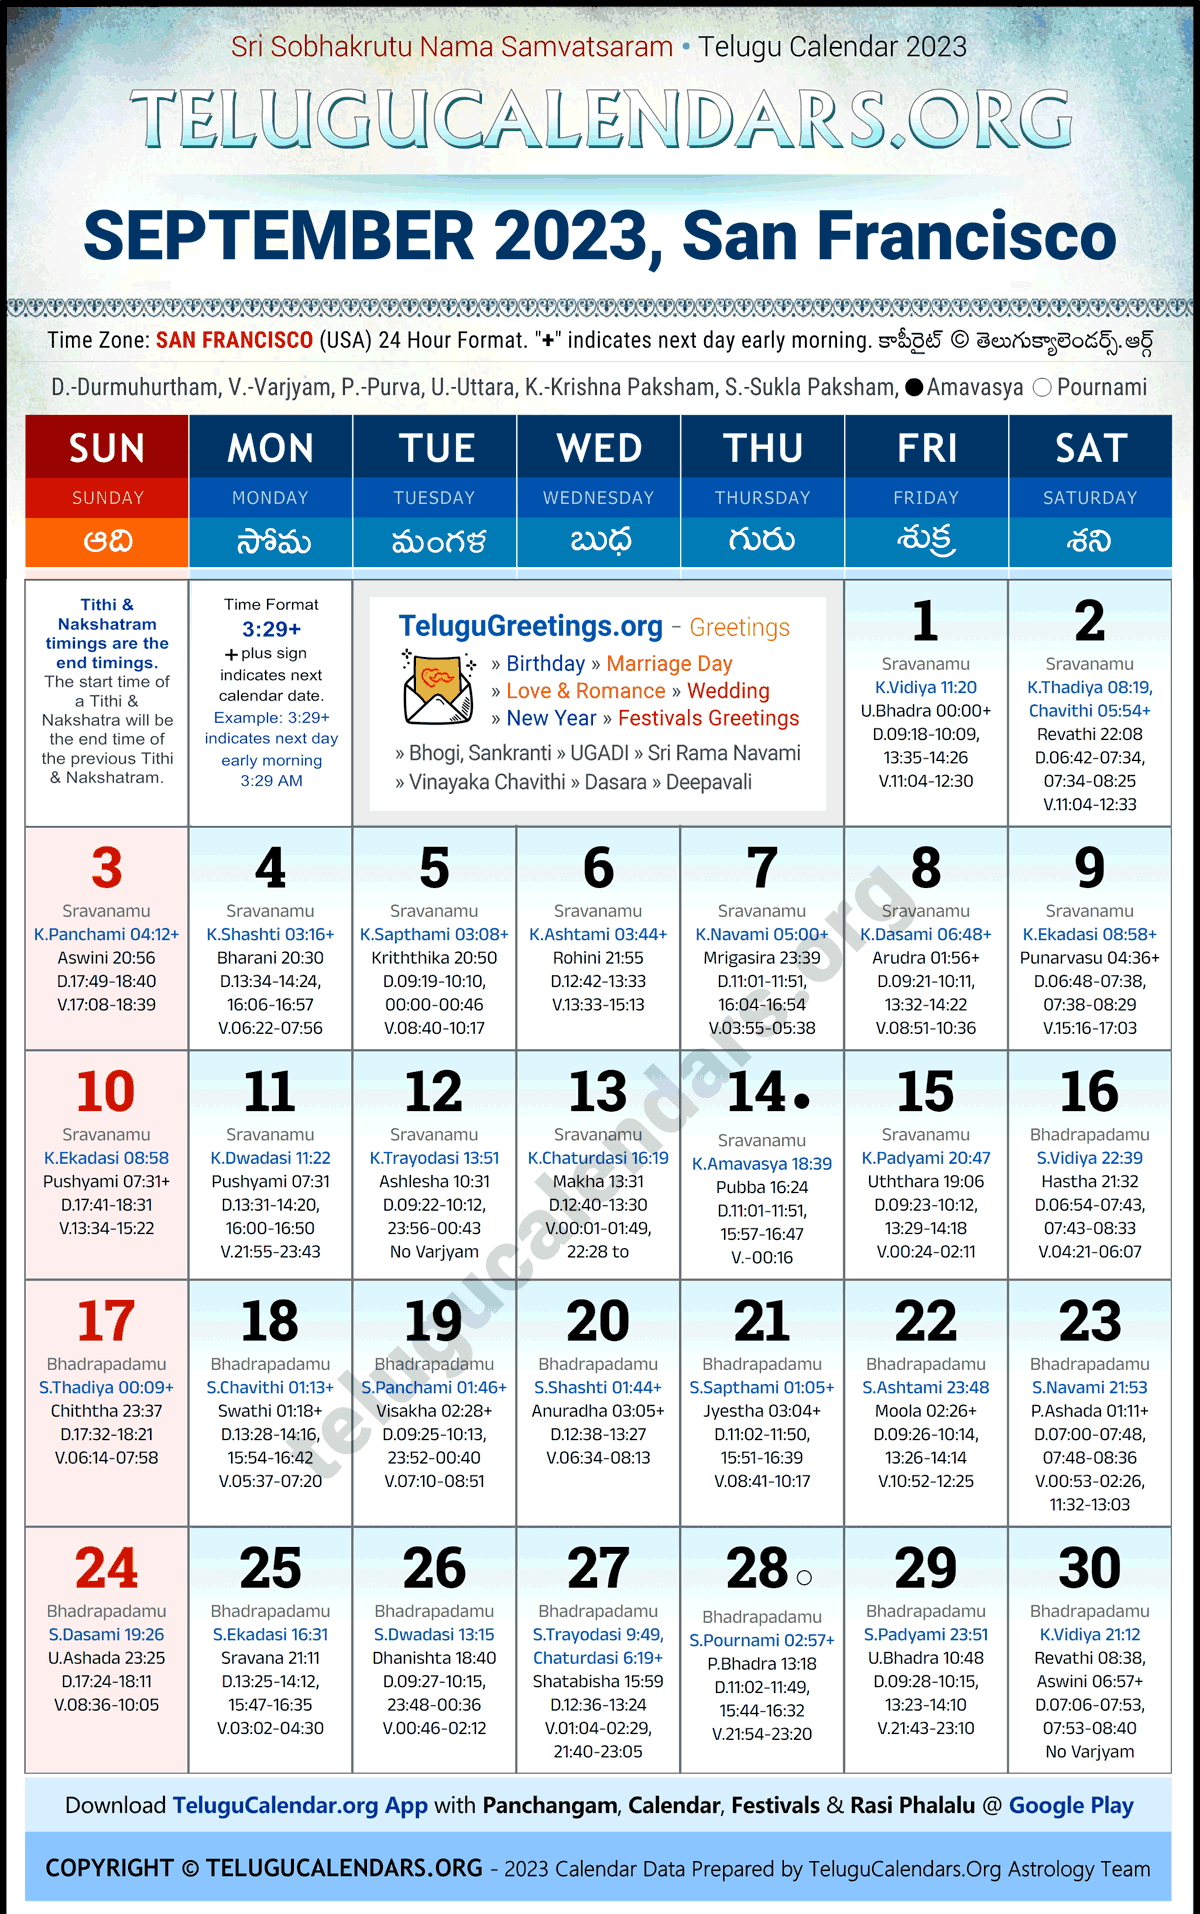 Telugu Calendar 2023 September Festivals for San Francisco